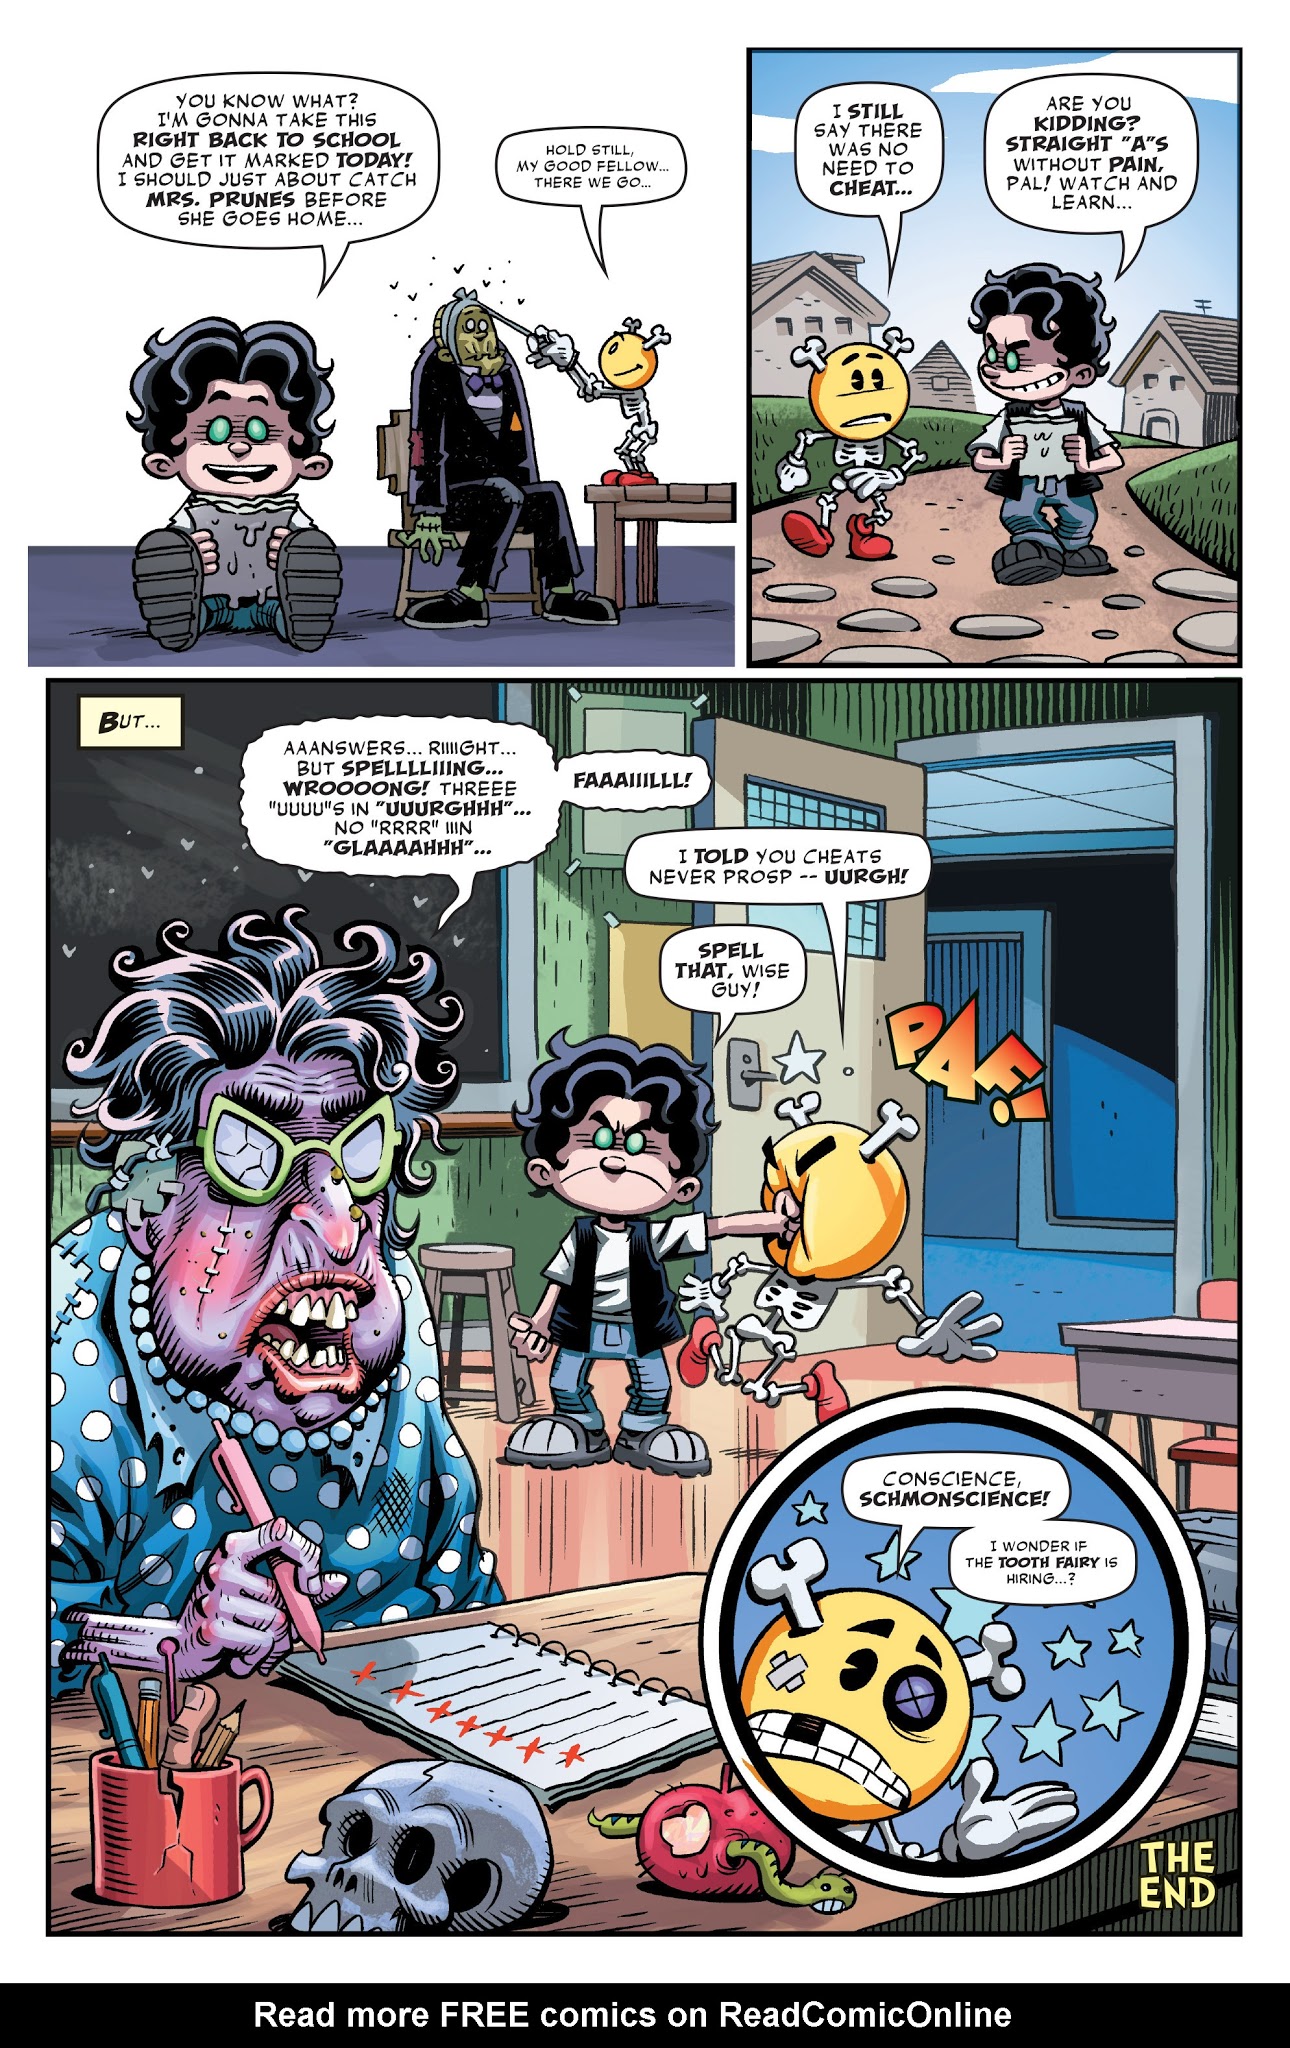 Doodle Jump Comics #3 (Issue)